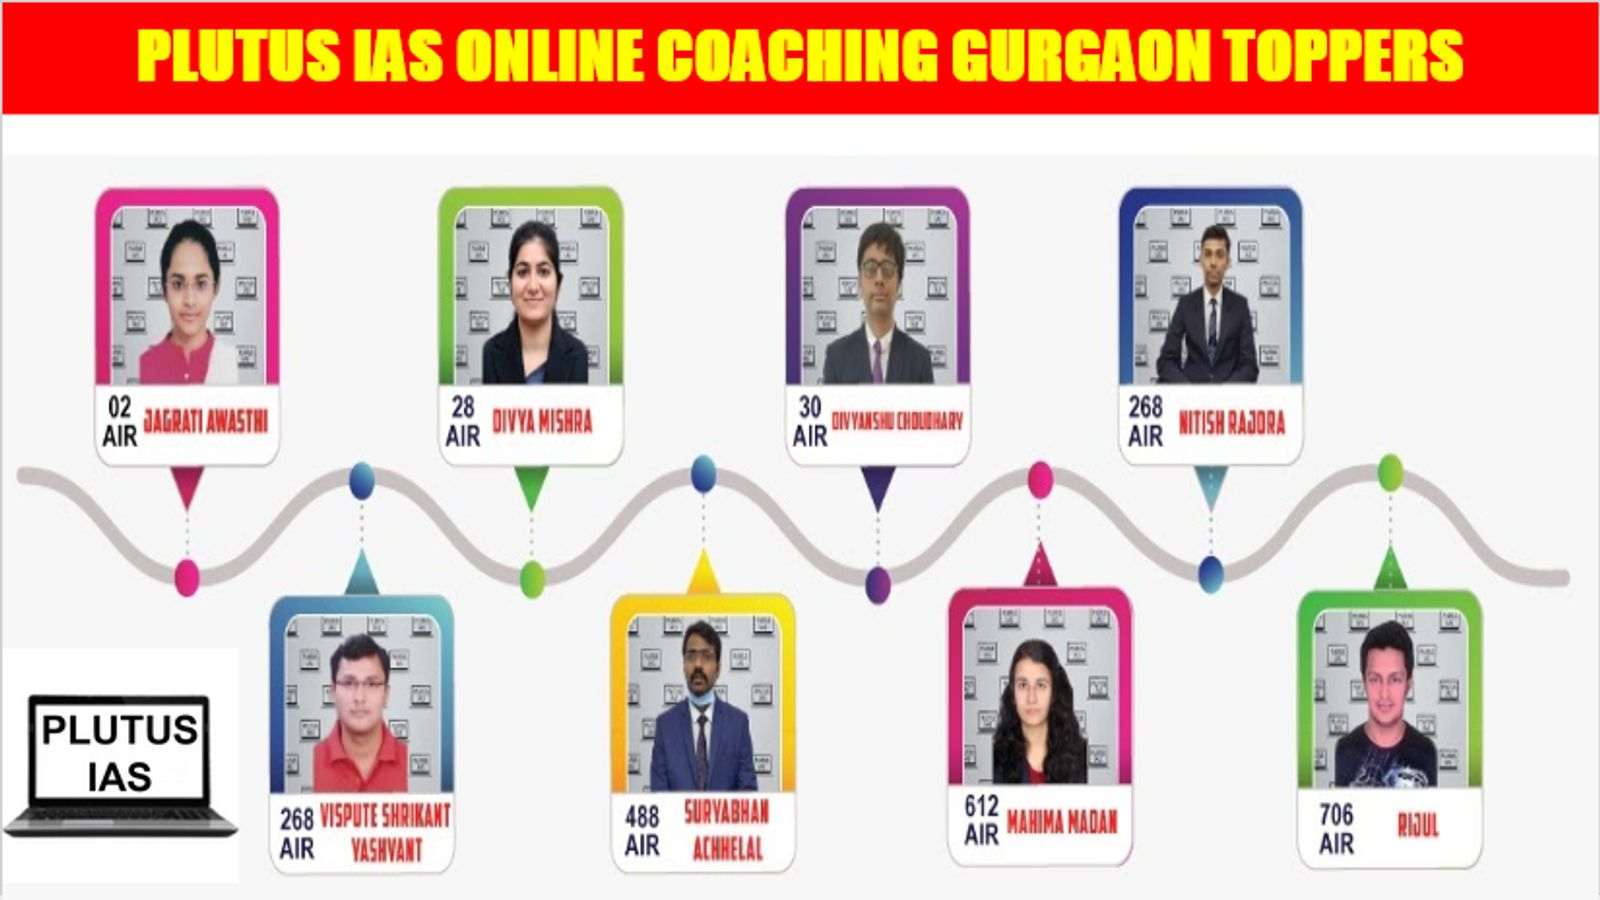 Plutus IAS Online Coaching Gurgaon Toppers